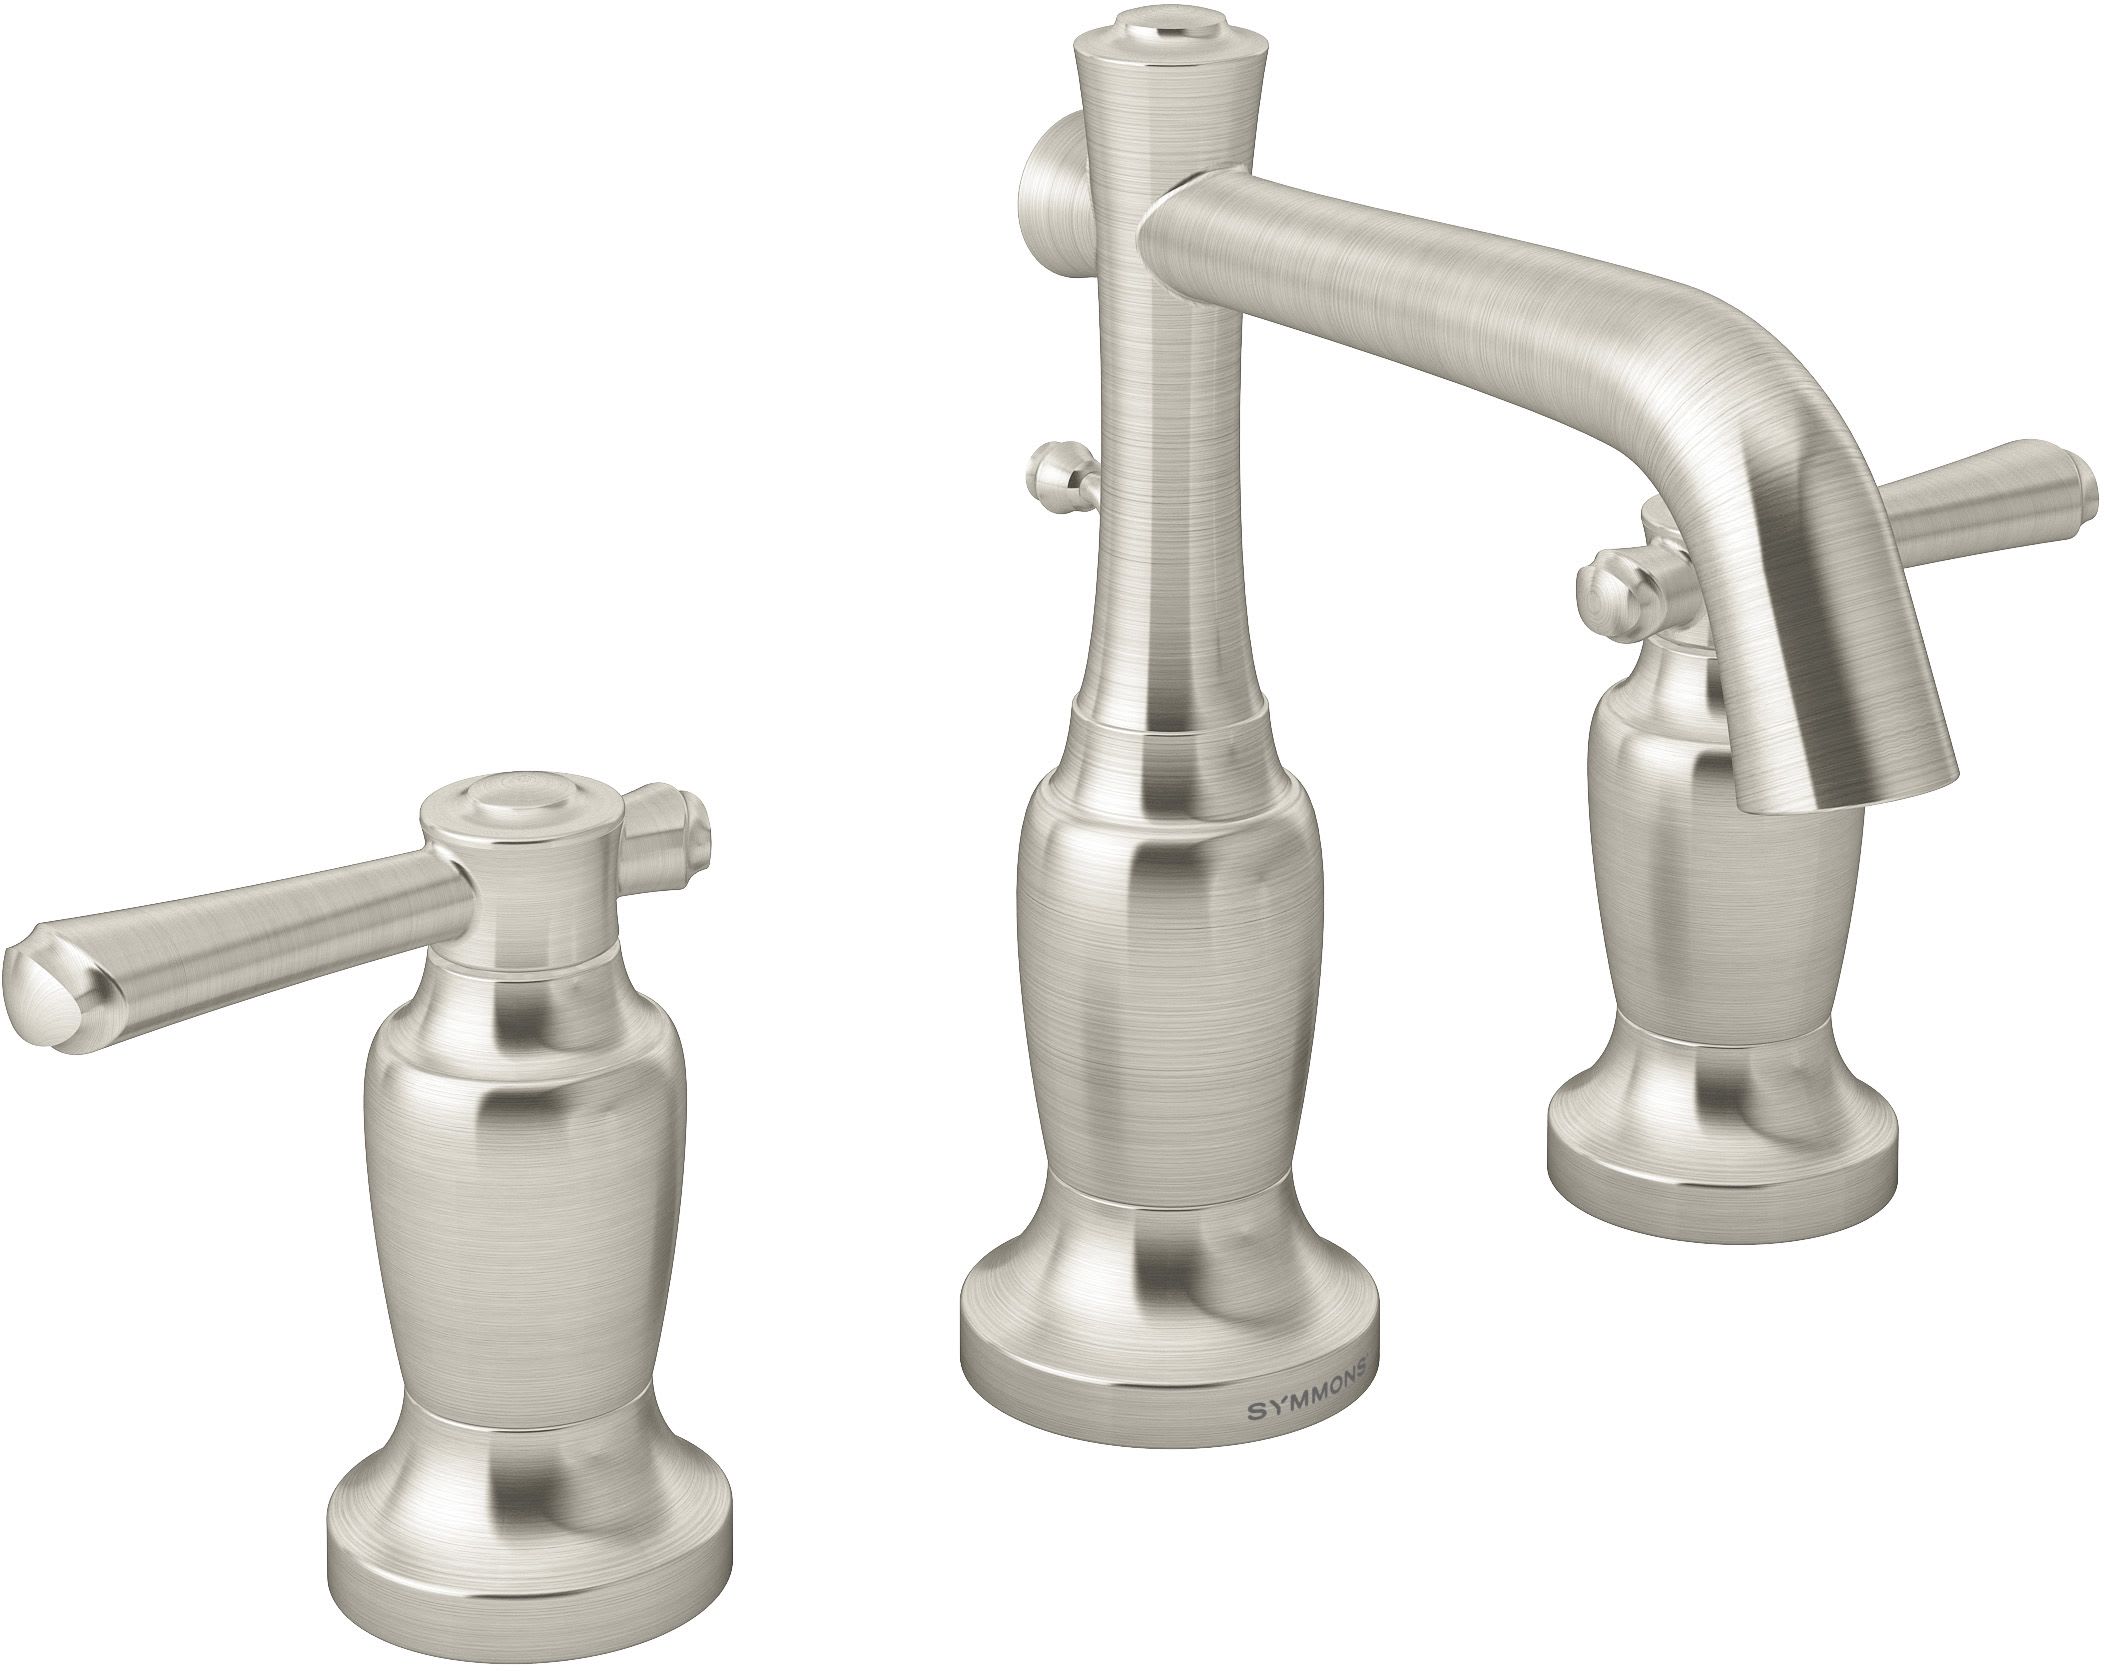 Symmons Slw 5412 1 0 Chrome Degas 1 Gpm Widespread Bathroom Faucet